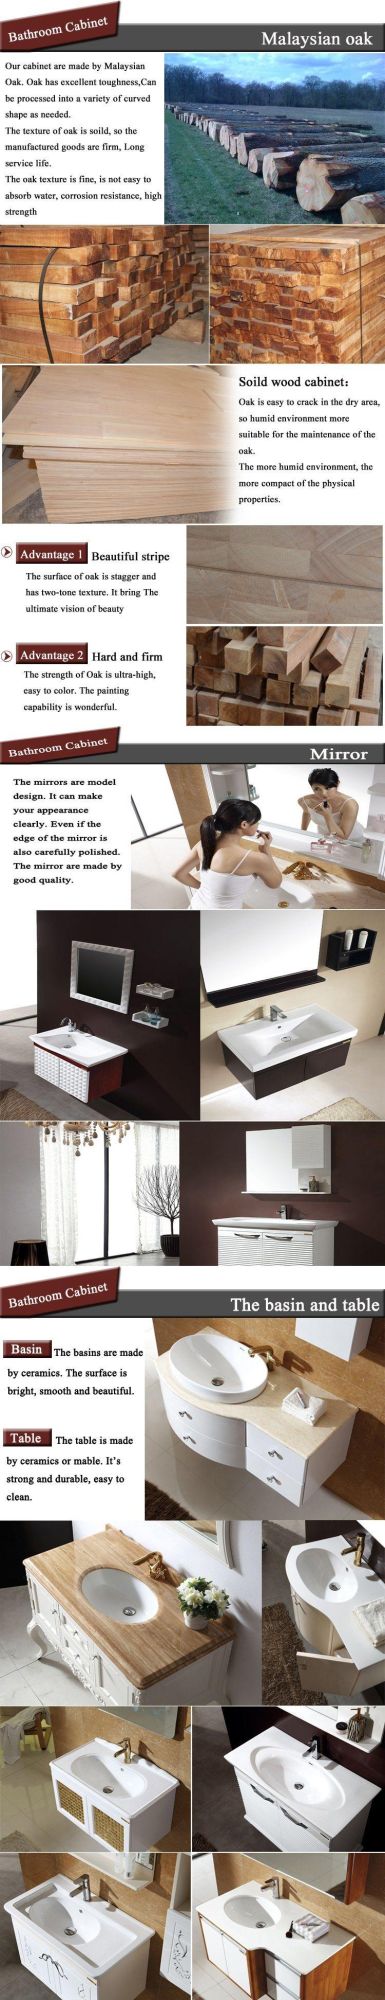 French Country Contemporary Commercial Bathroom Vanities Dark Wood Vietnam